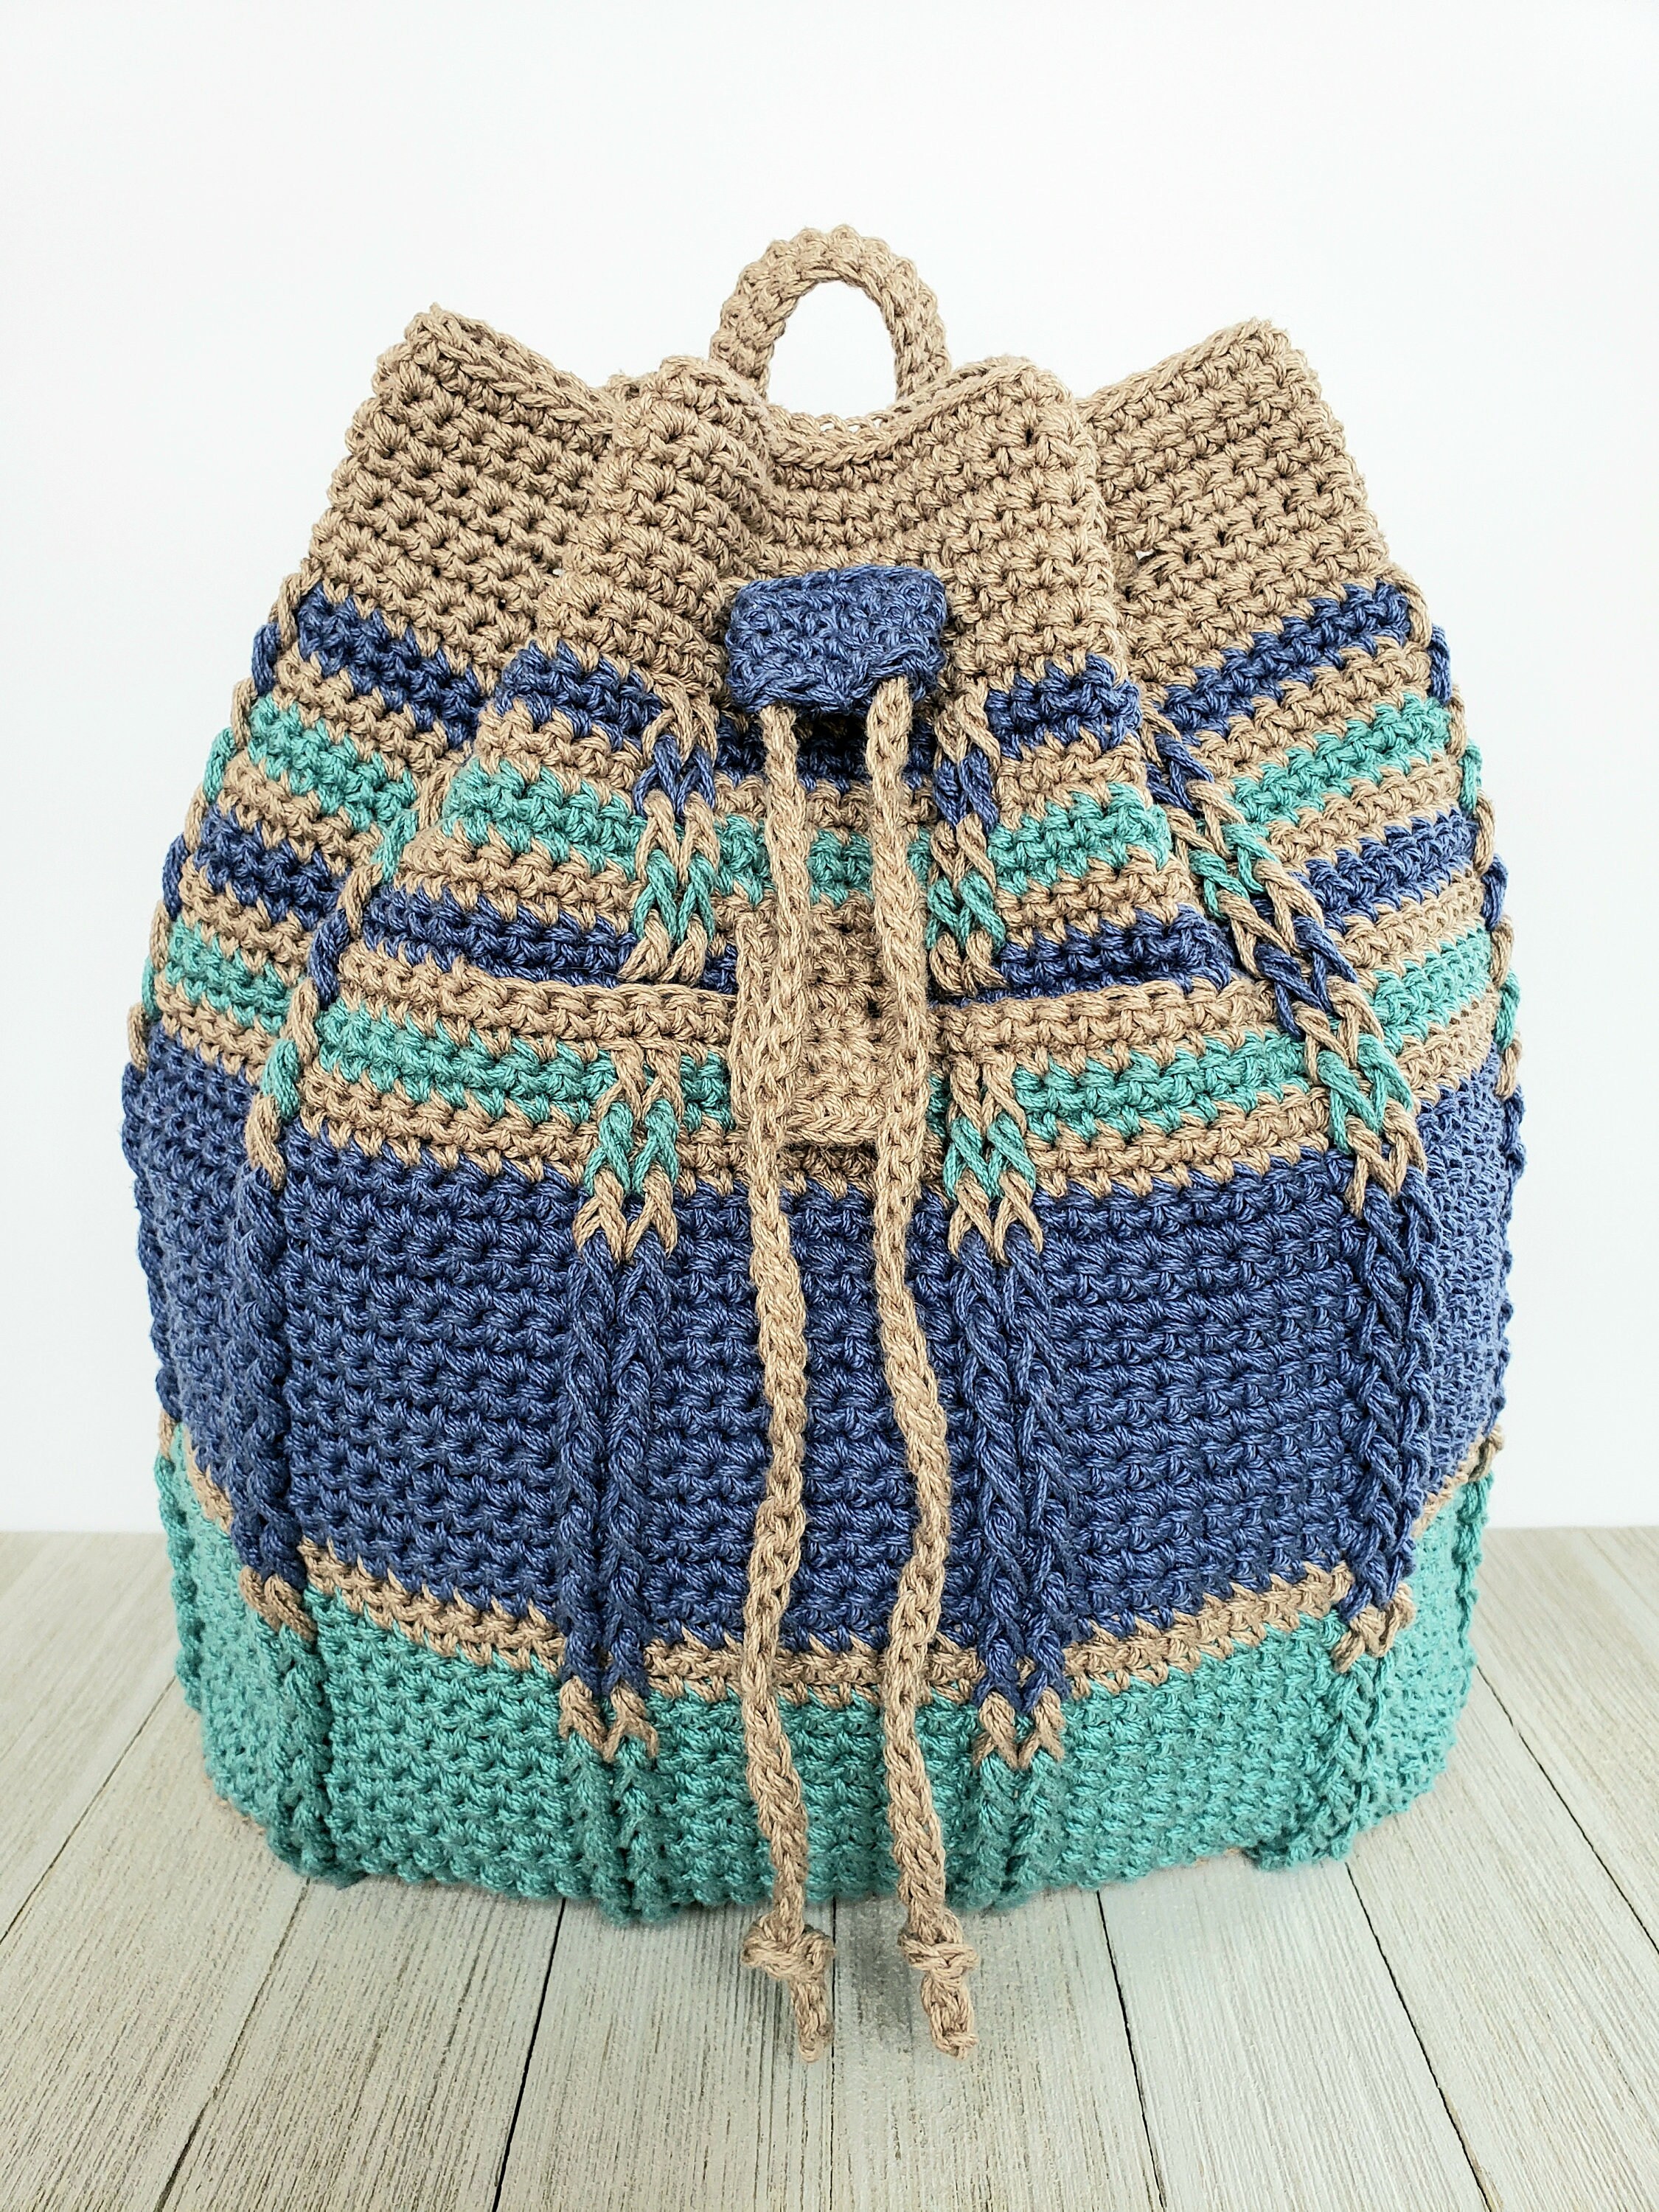 Crochet Bag PATTERN Cable Stripes Backpack Drawstring Bag | Etsy